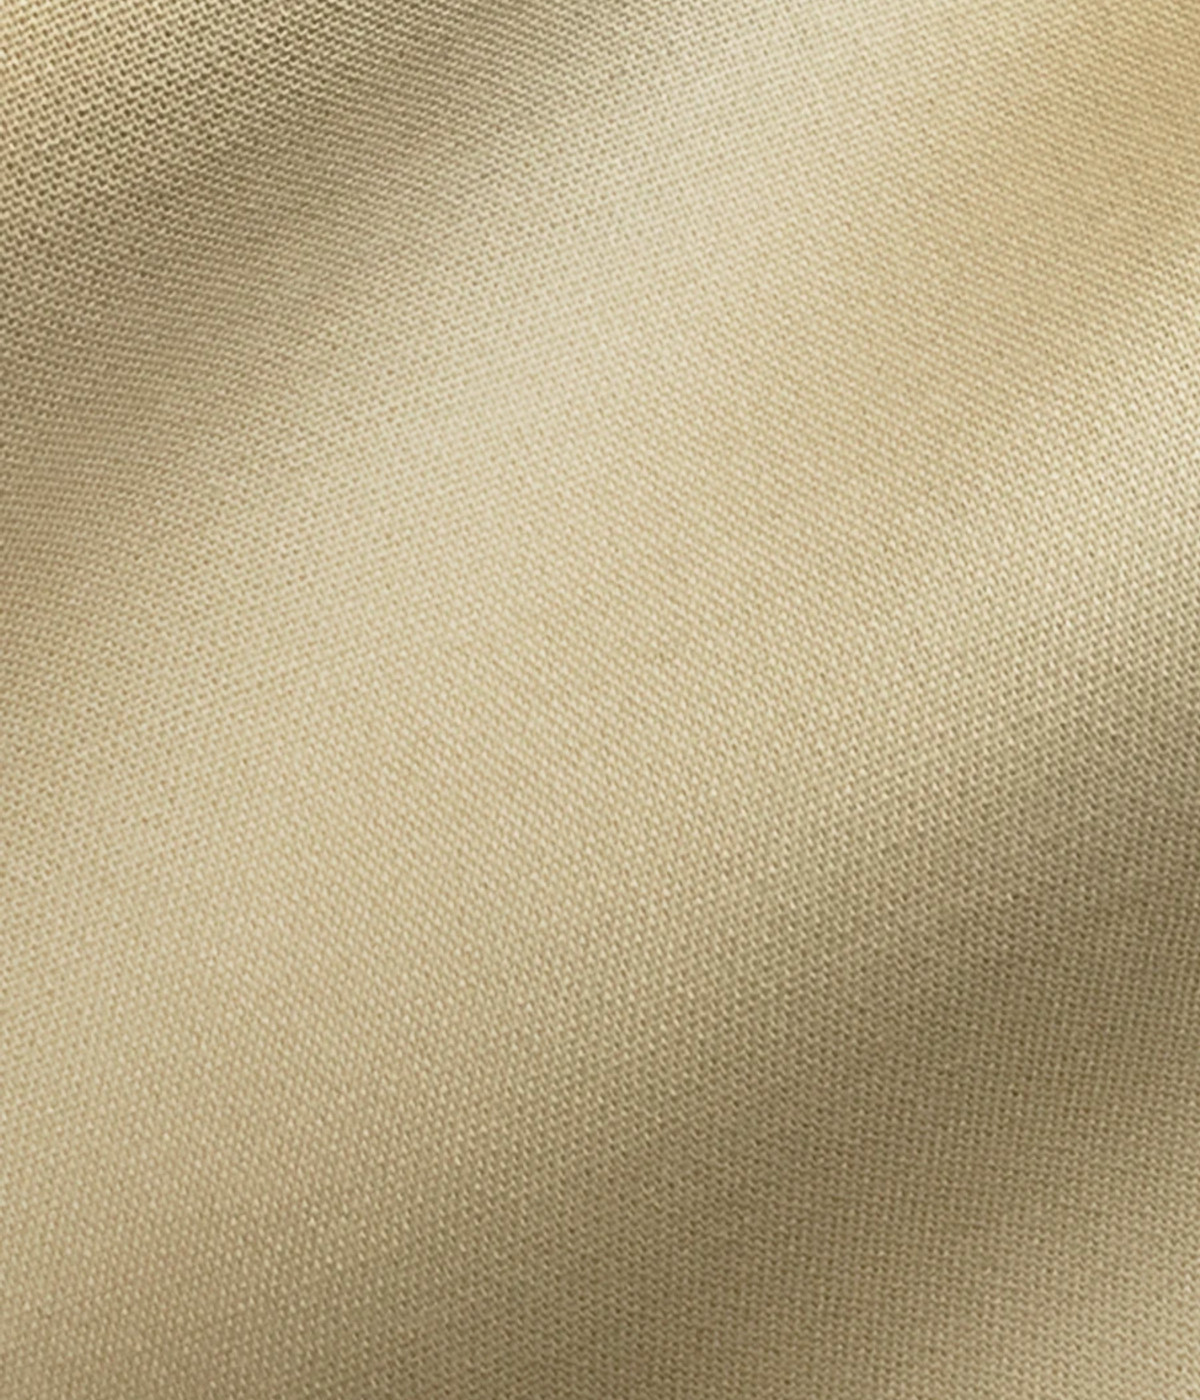 Khaki Cream Cotton Suit - Hangrr